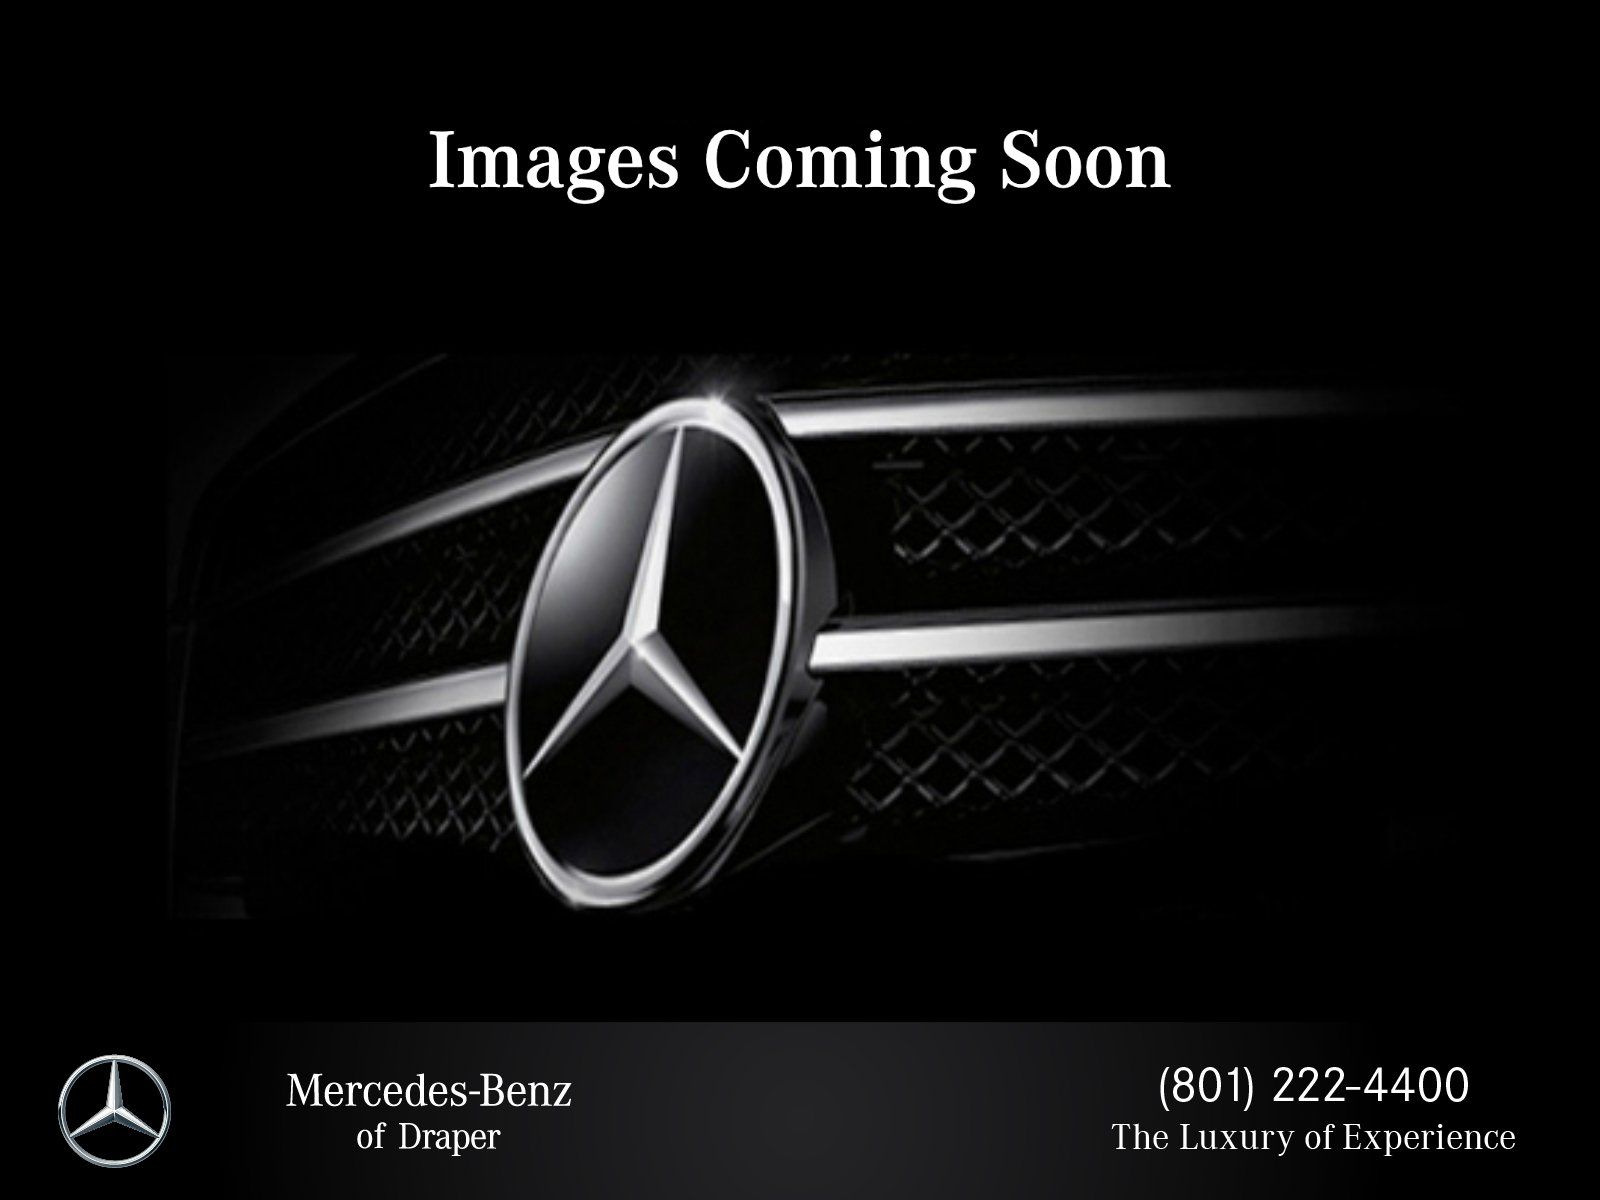 New 2021 Mercedes Benz G Class AMG® G 63 4MATIC® Sport Utility In Draper #MX398146. Mercedes Benz Of Draper